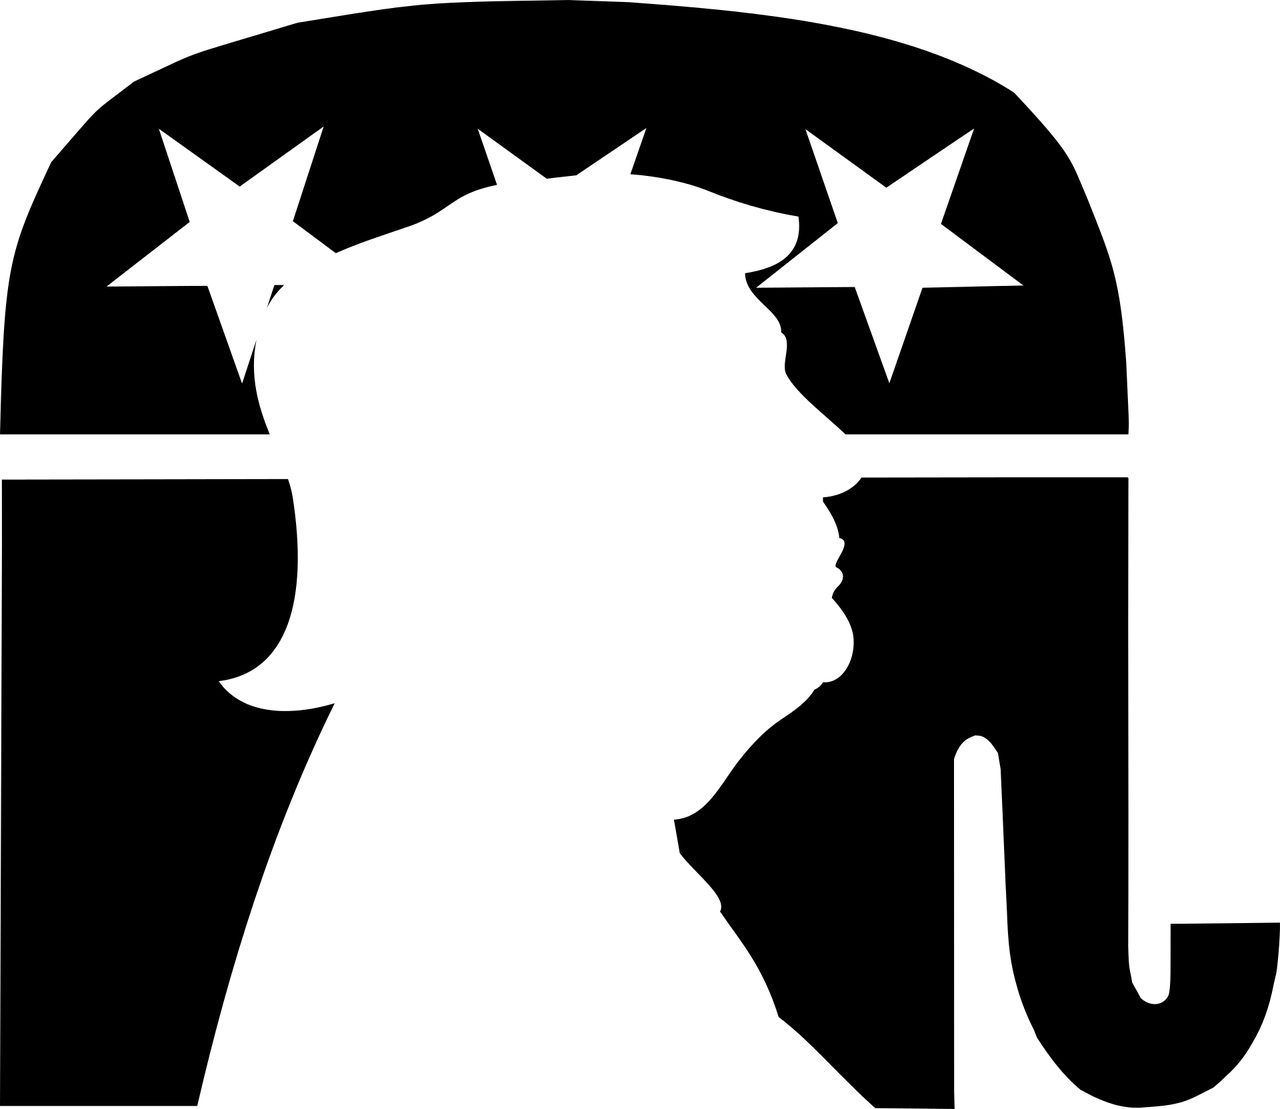 GOP and Donald Trump. Pixabay License